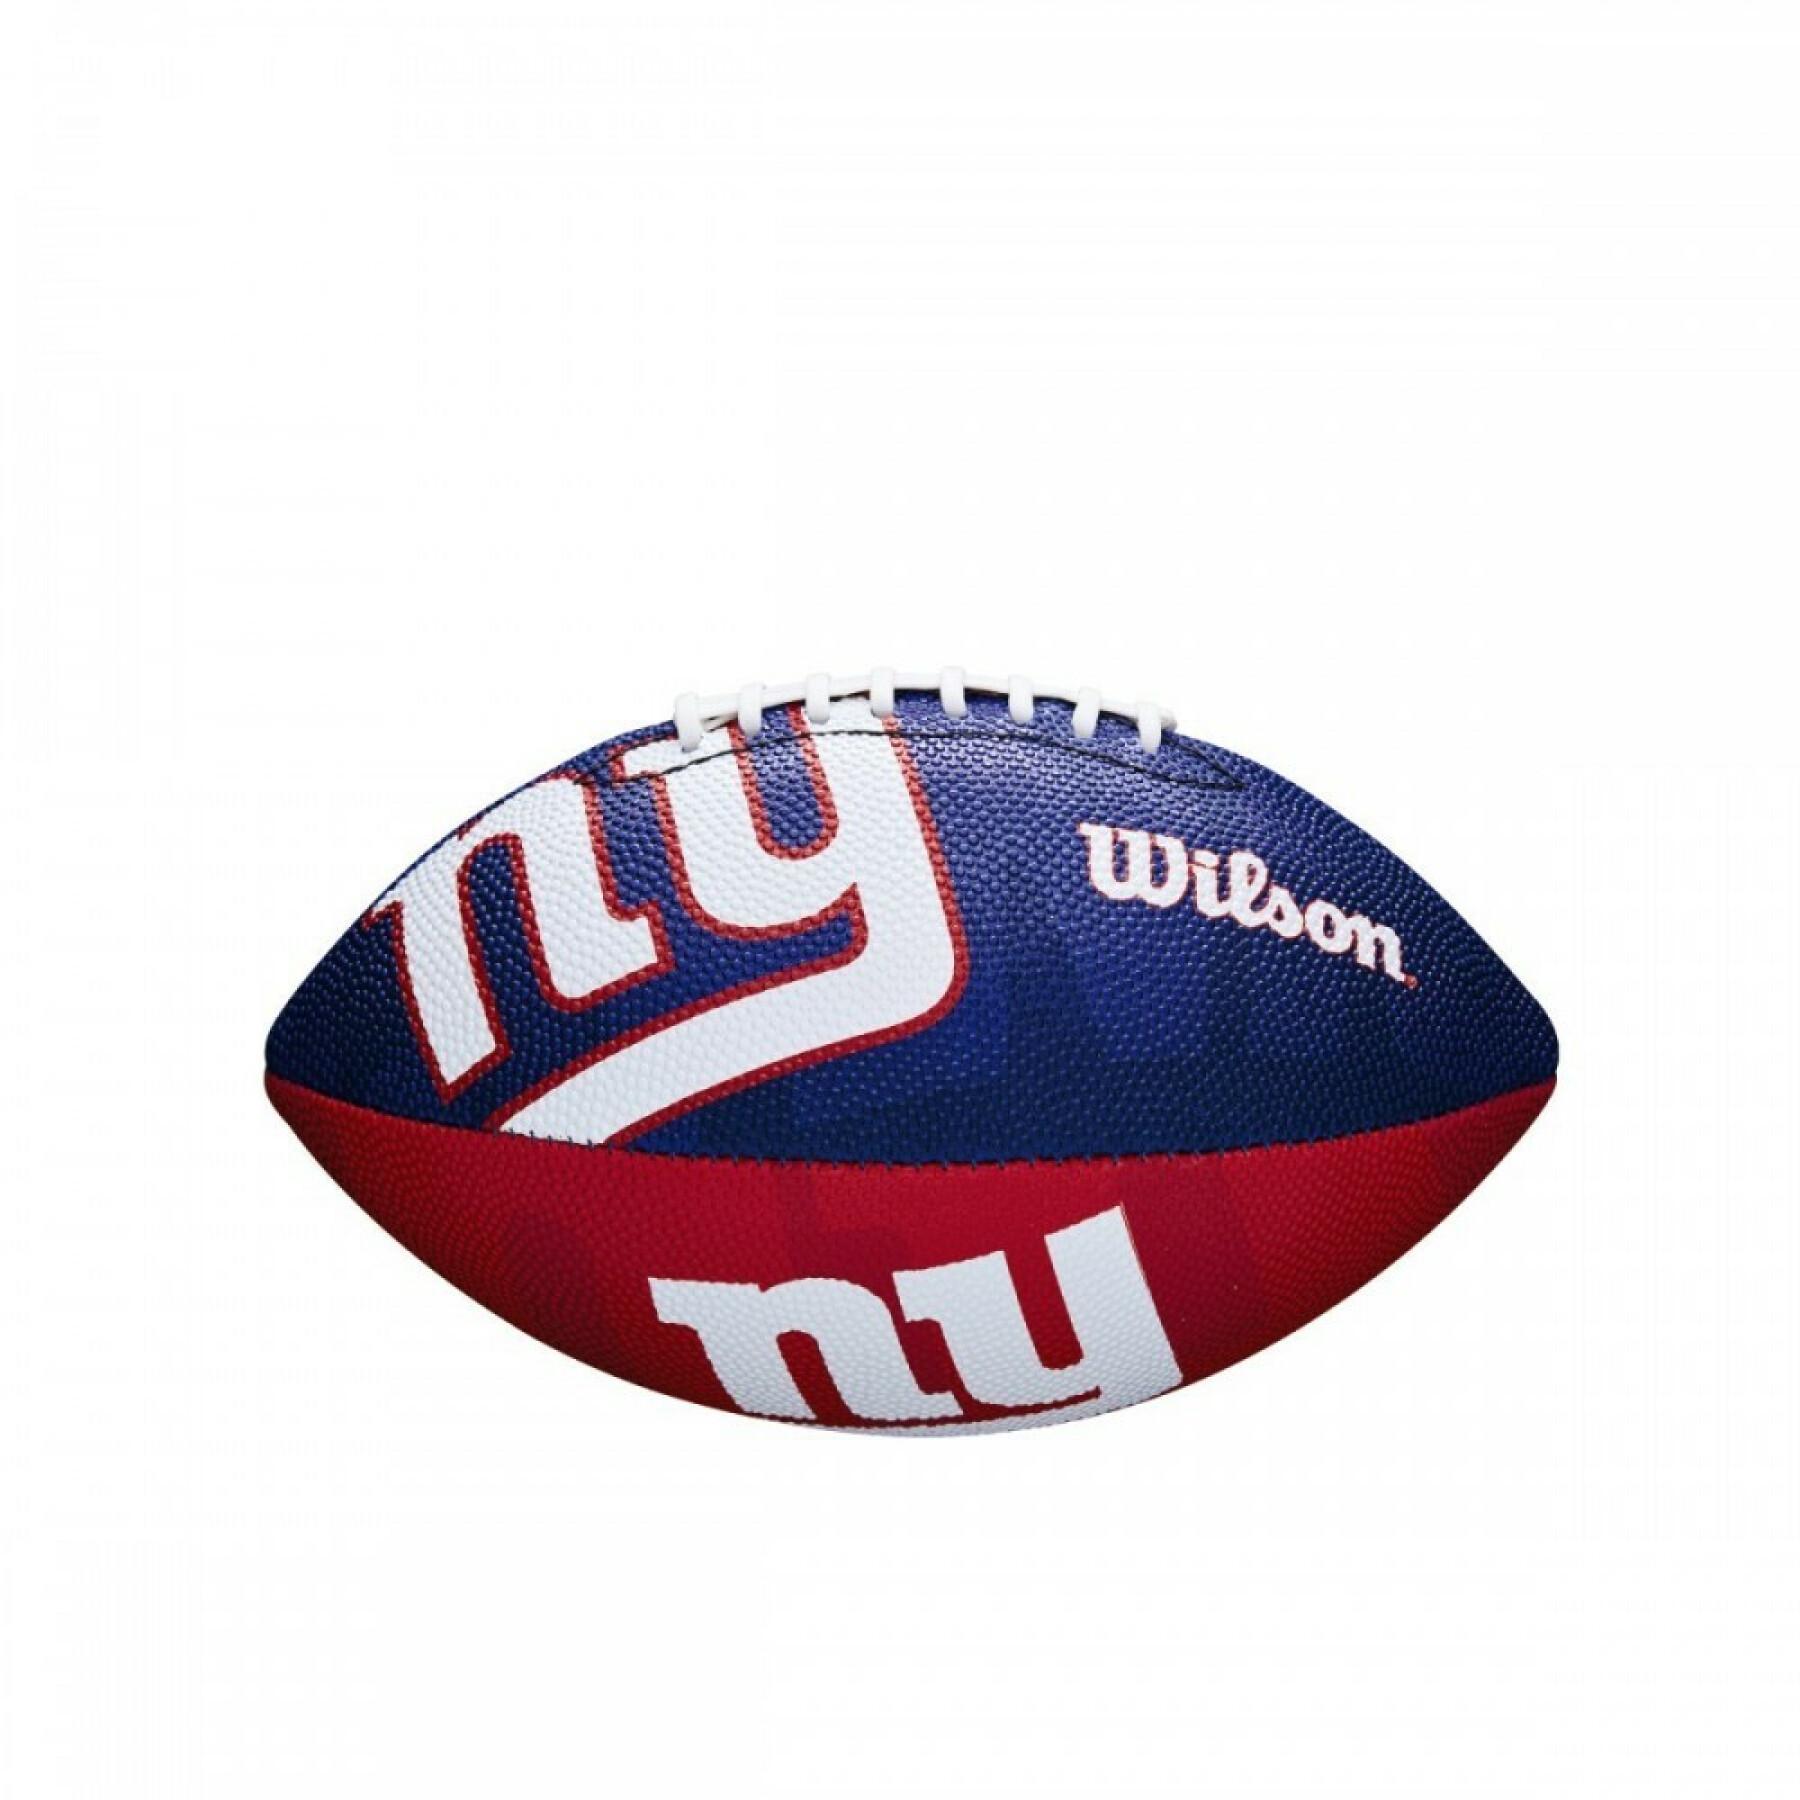 Bola criança Wilson Giants NFL Logo